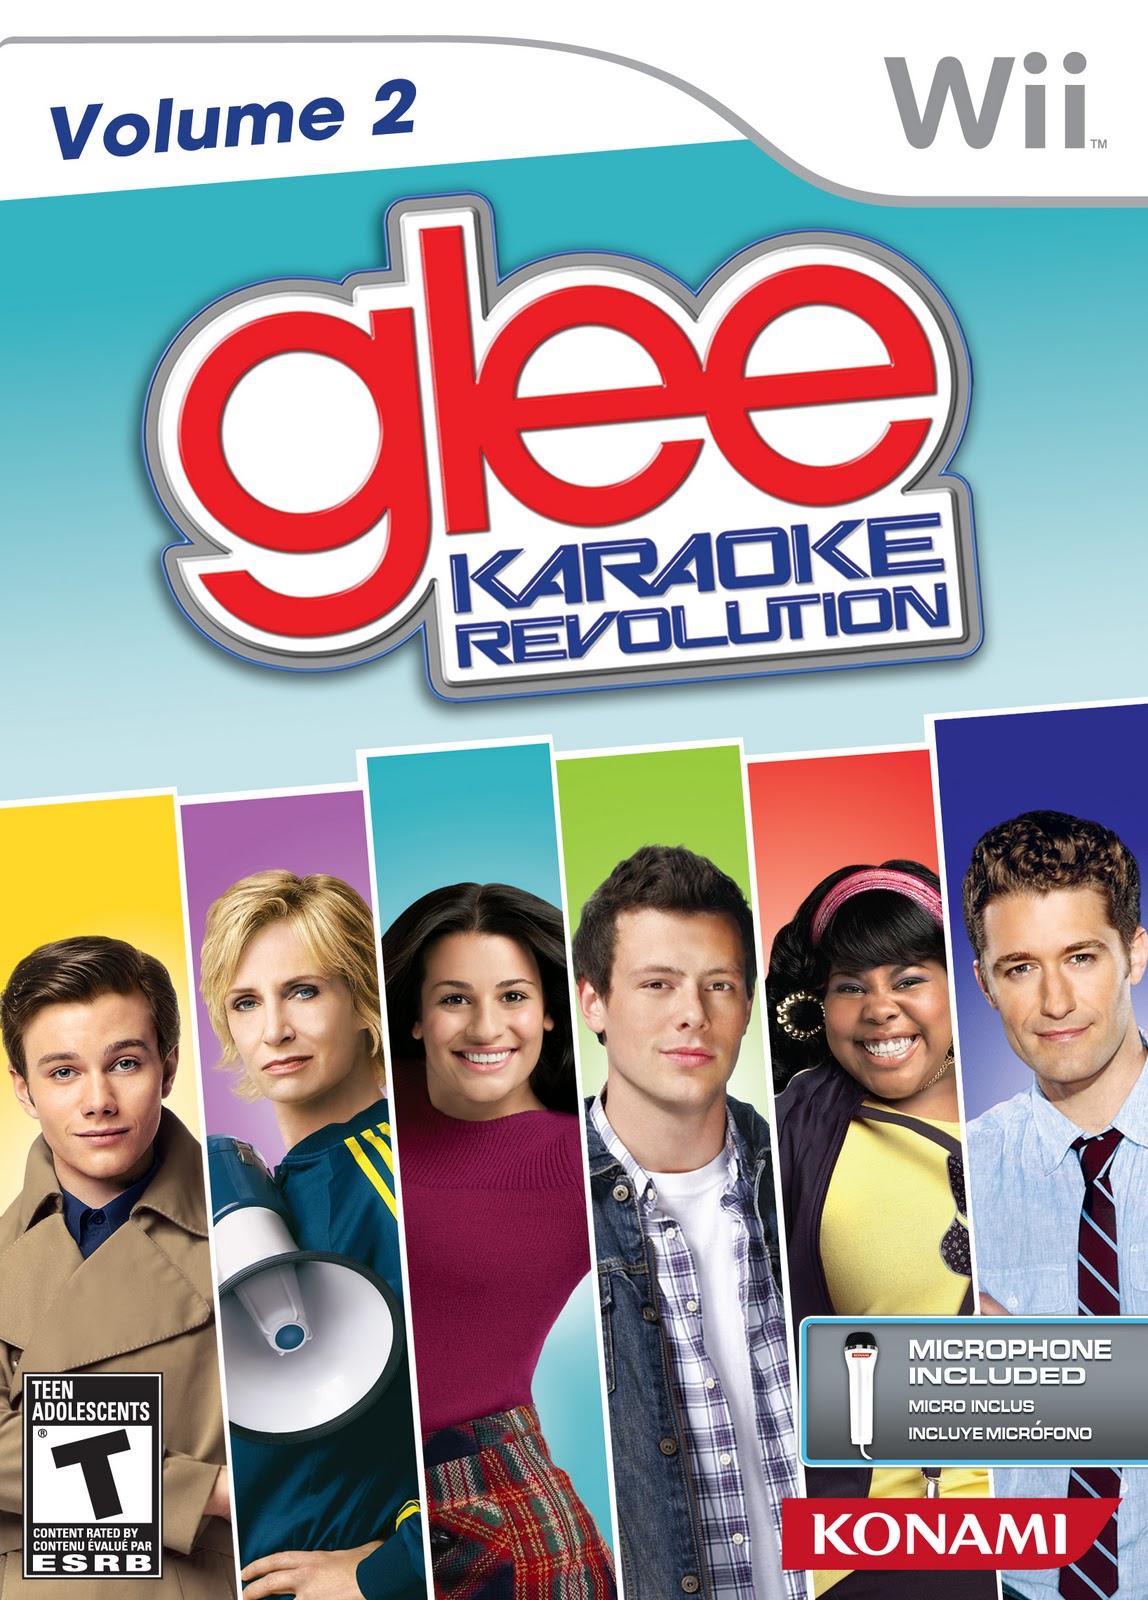 Karaoke Revolution Glee: Volume 2 | Glee Wiki | Fandom